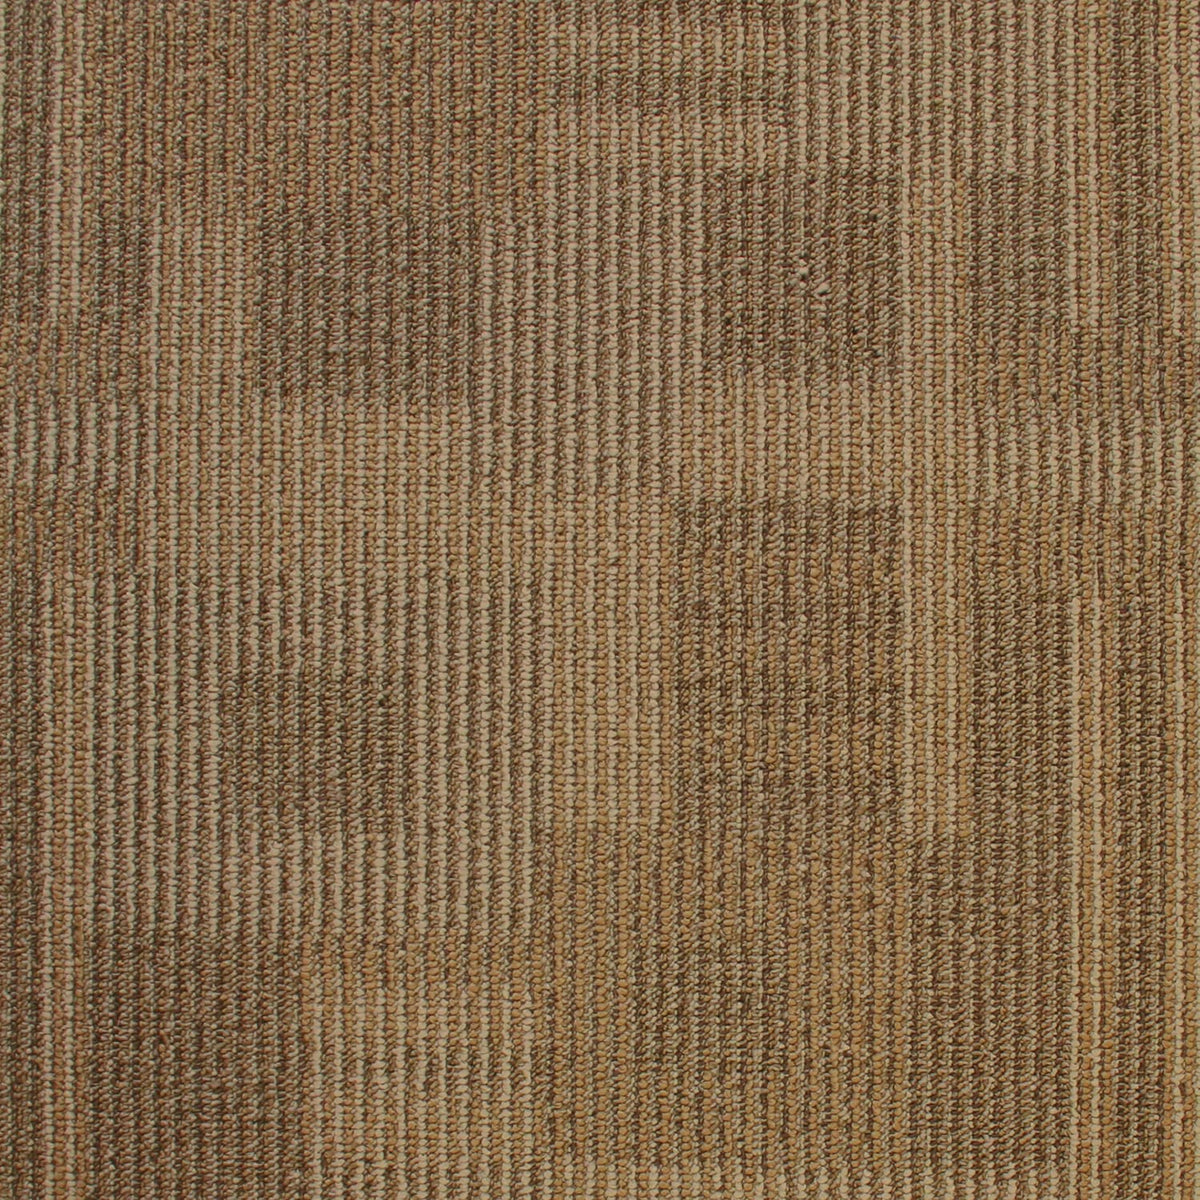 Kraus - Dimensions - Carpet Tile - Chalkline